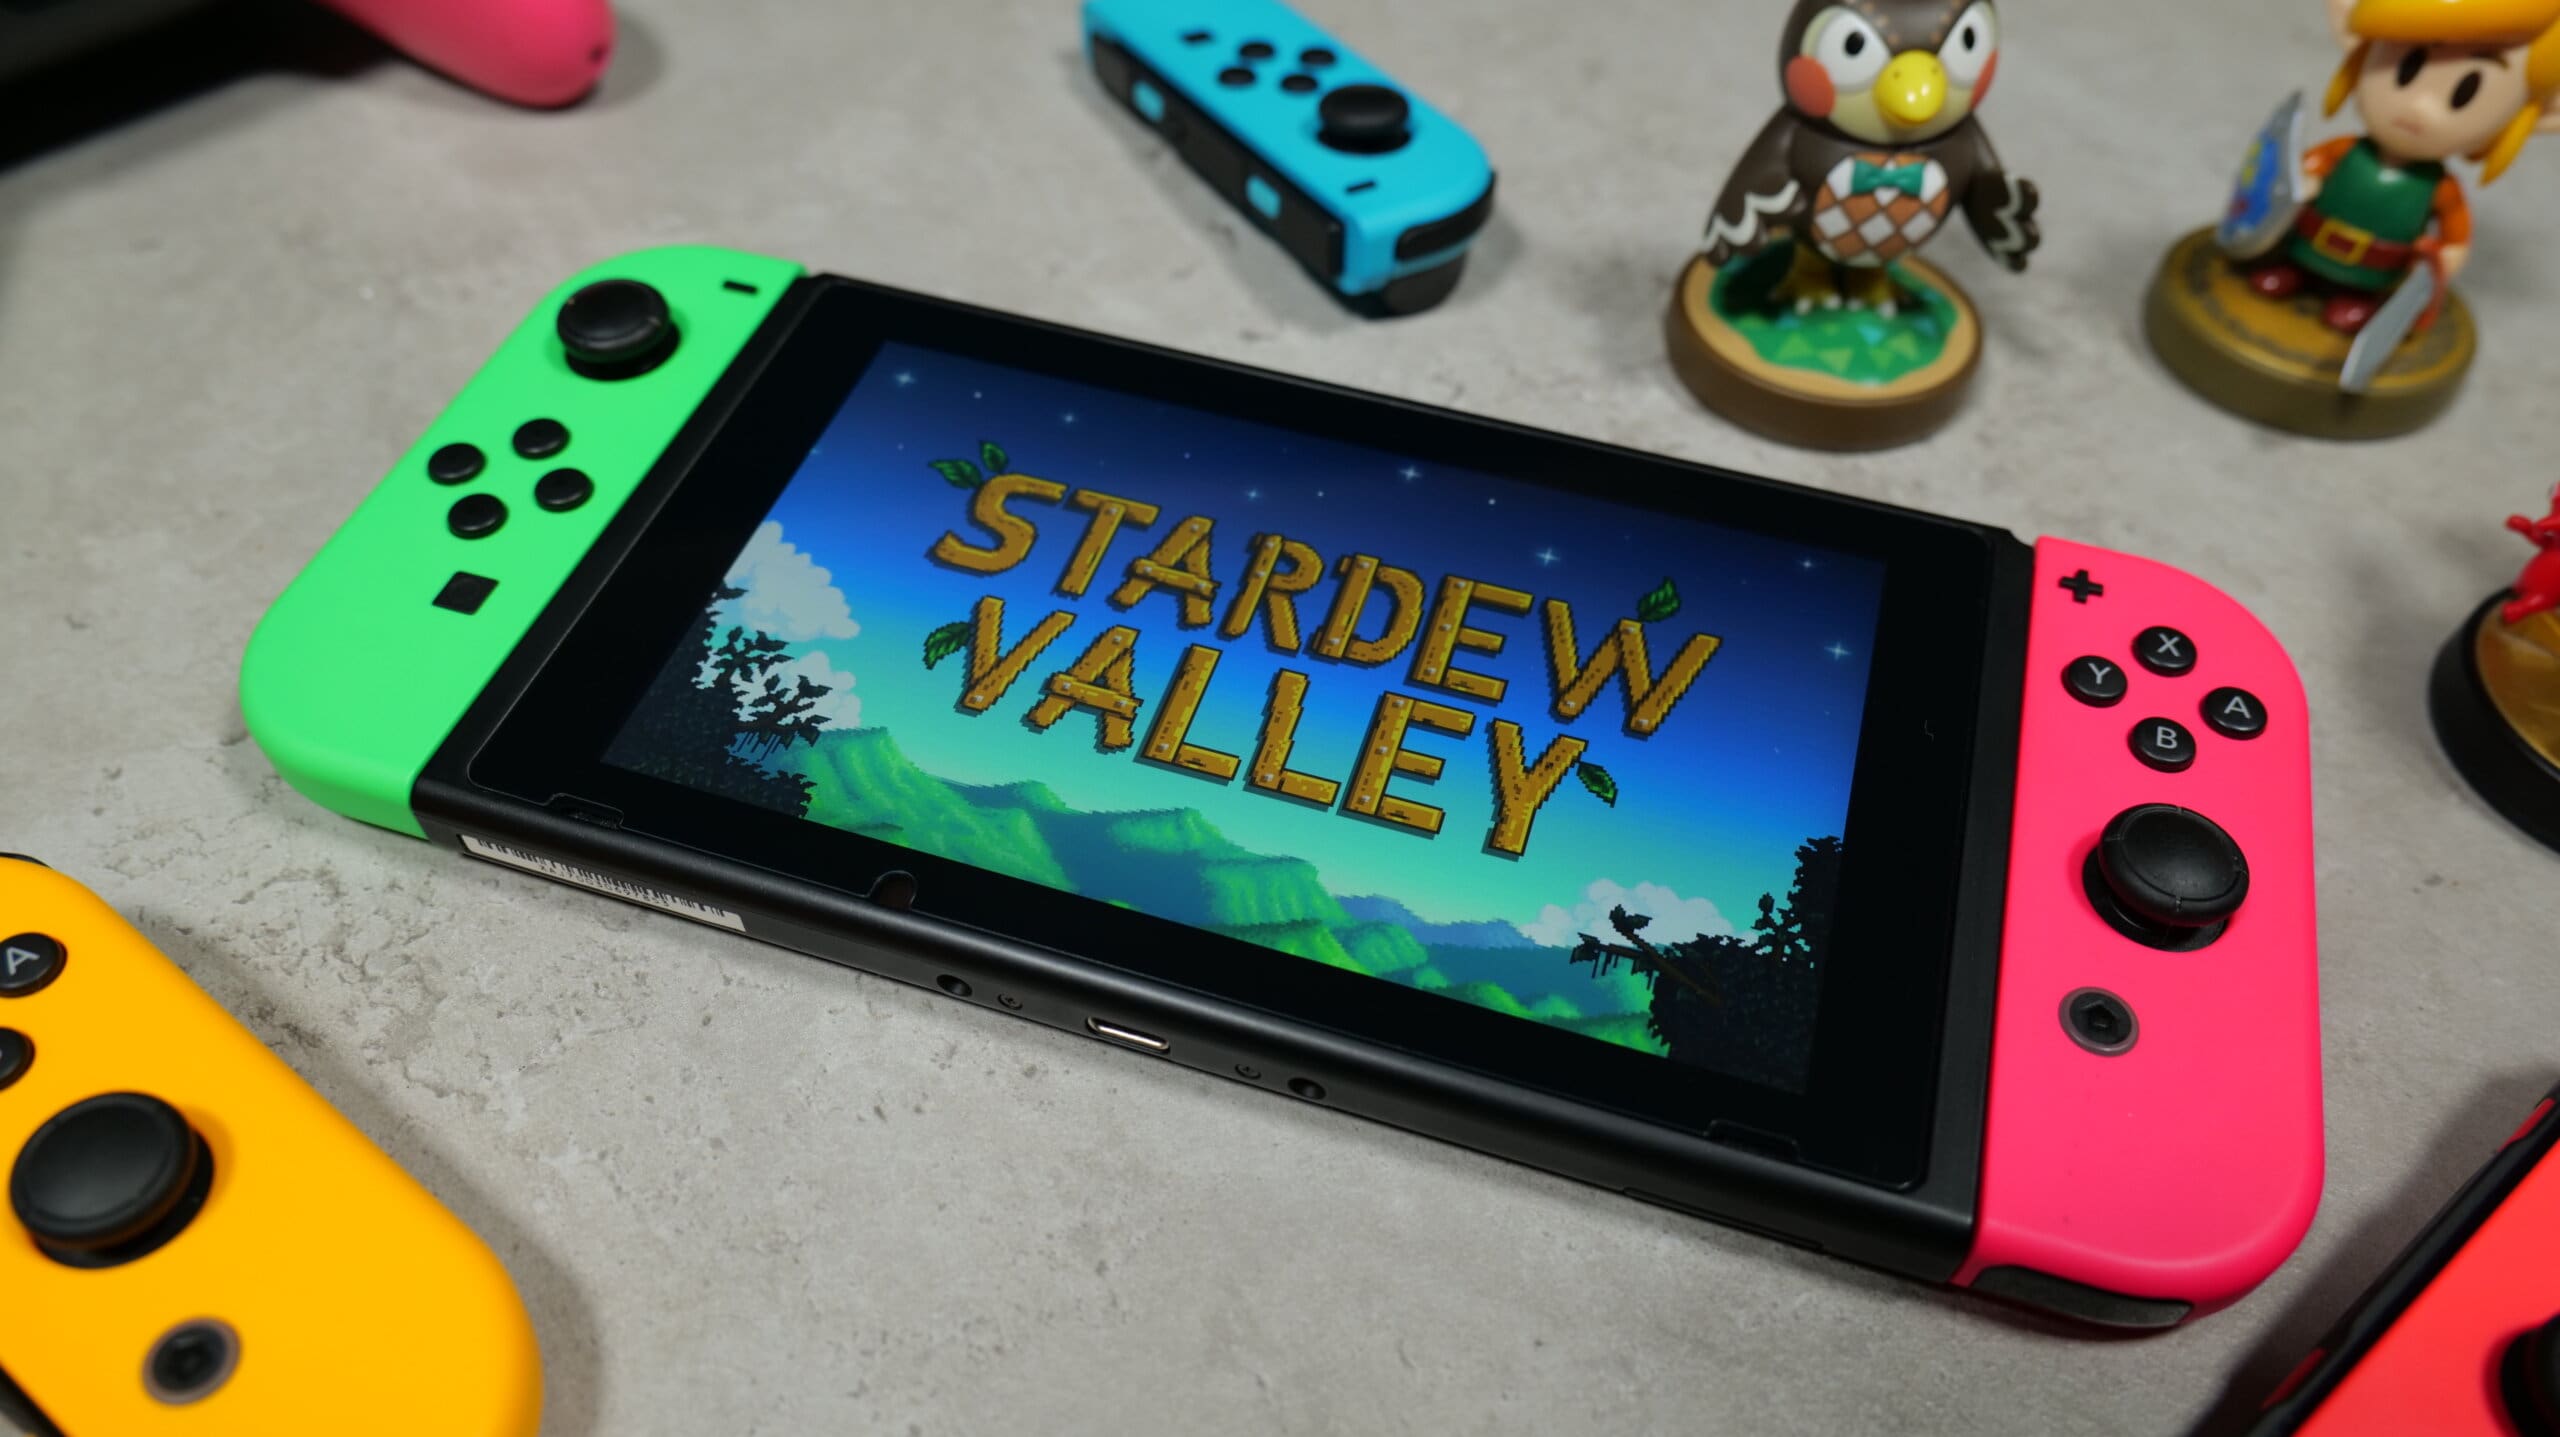 Stardew Valley  Nintendo Switch - Limited Game News